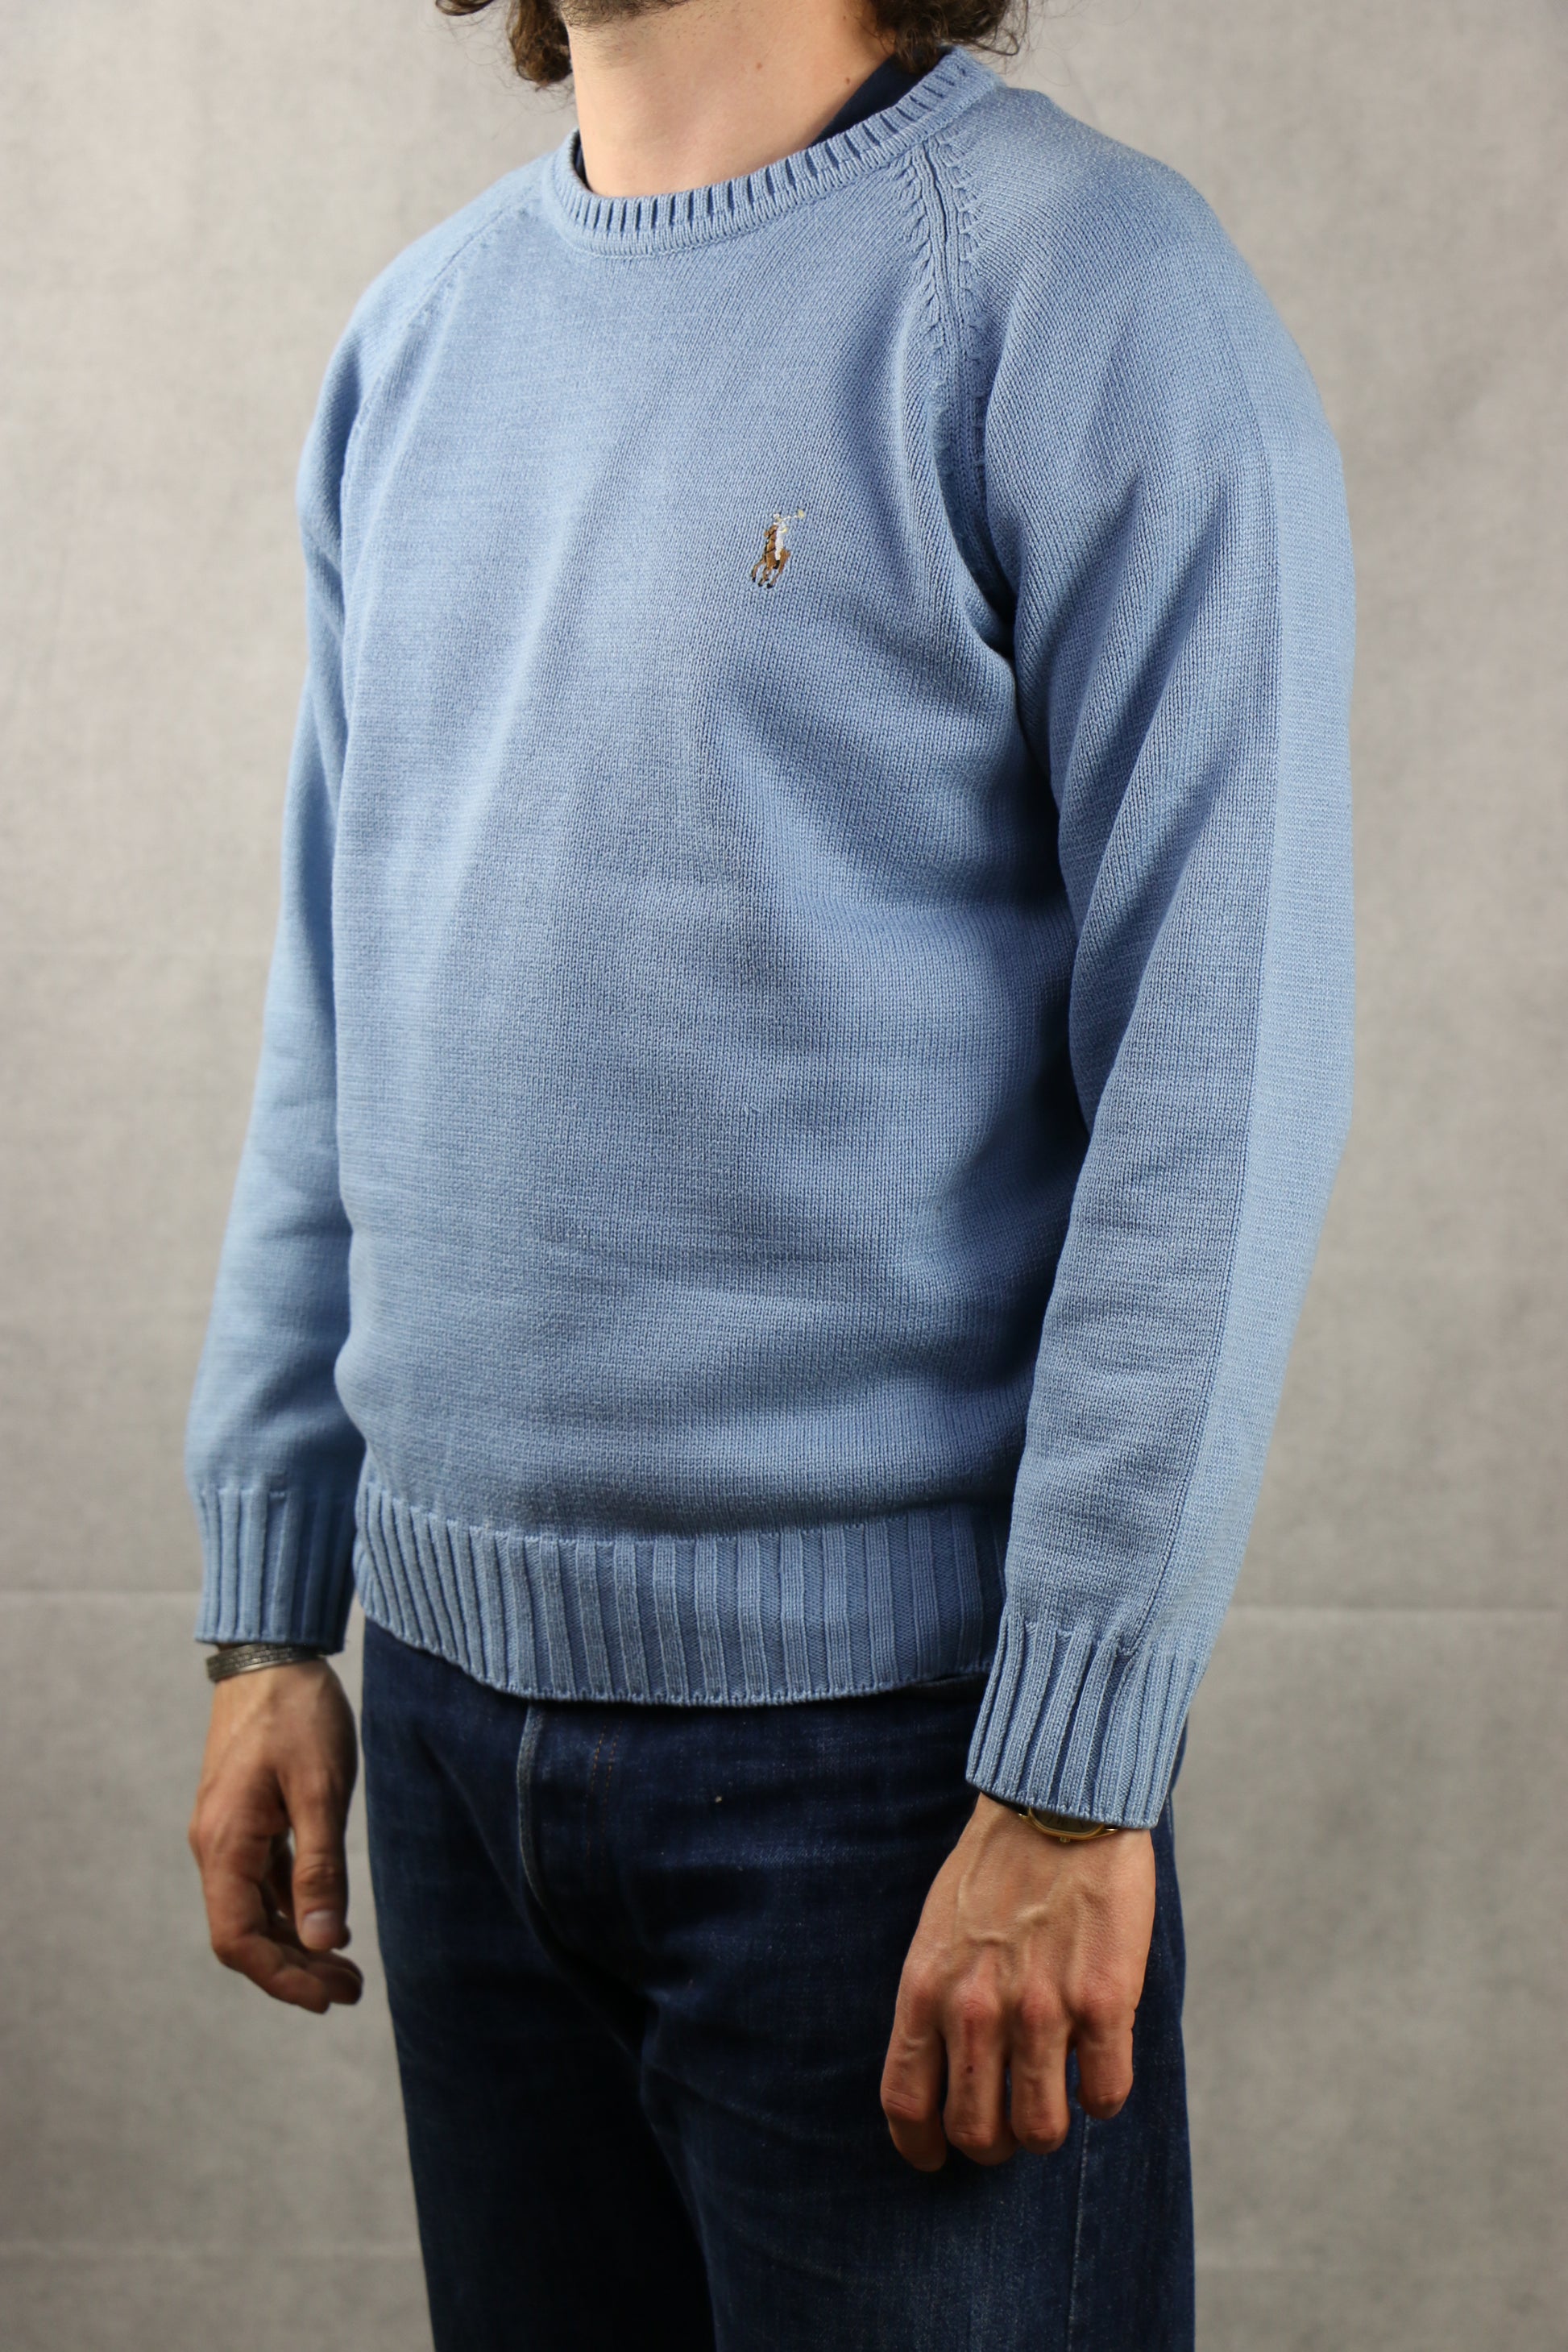 Ralph Lauren Sky Blue Sweater - vintage clothing clochard92.com